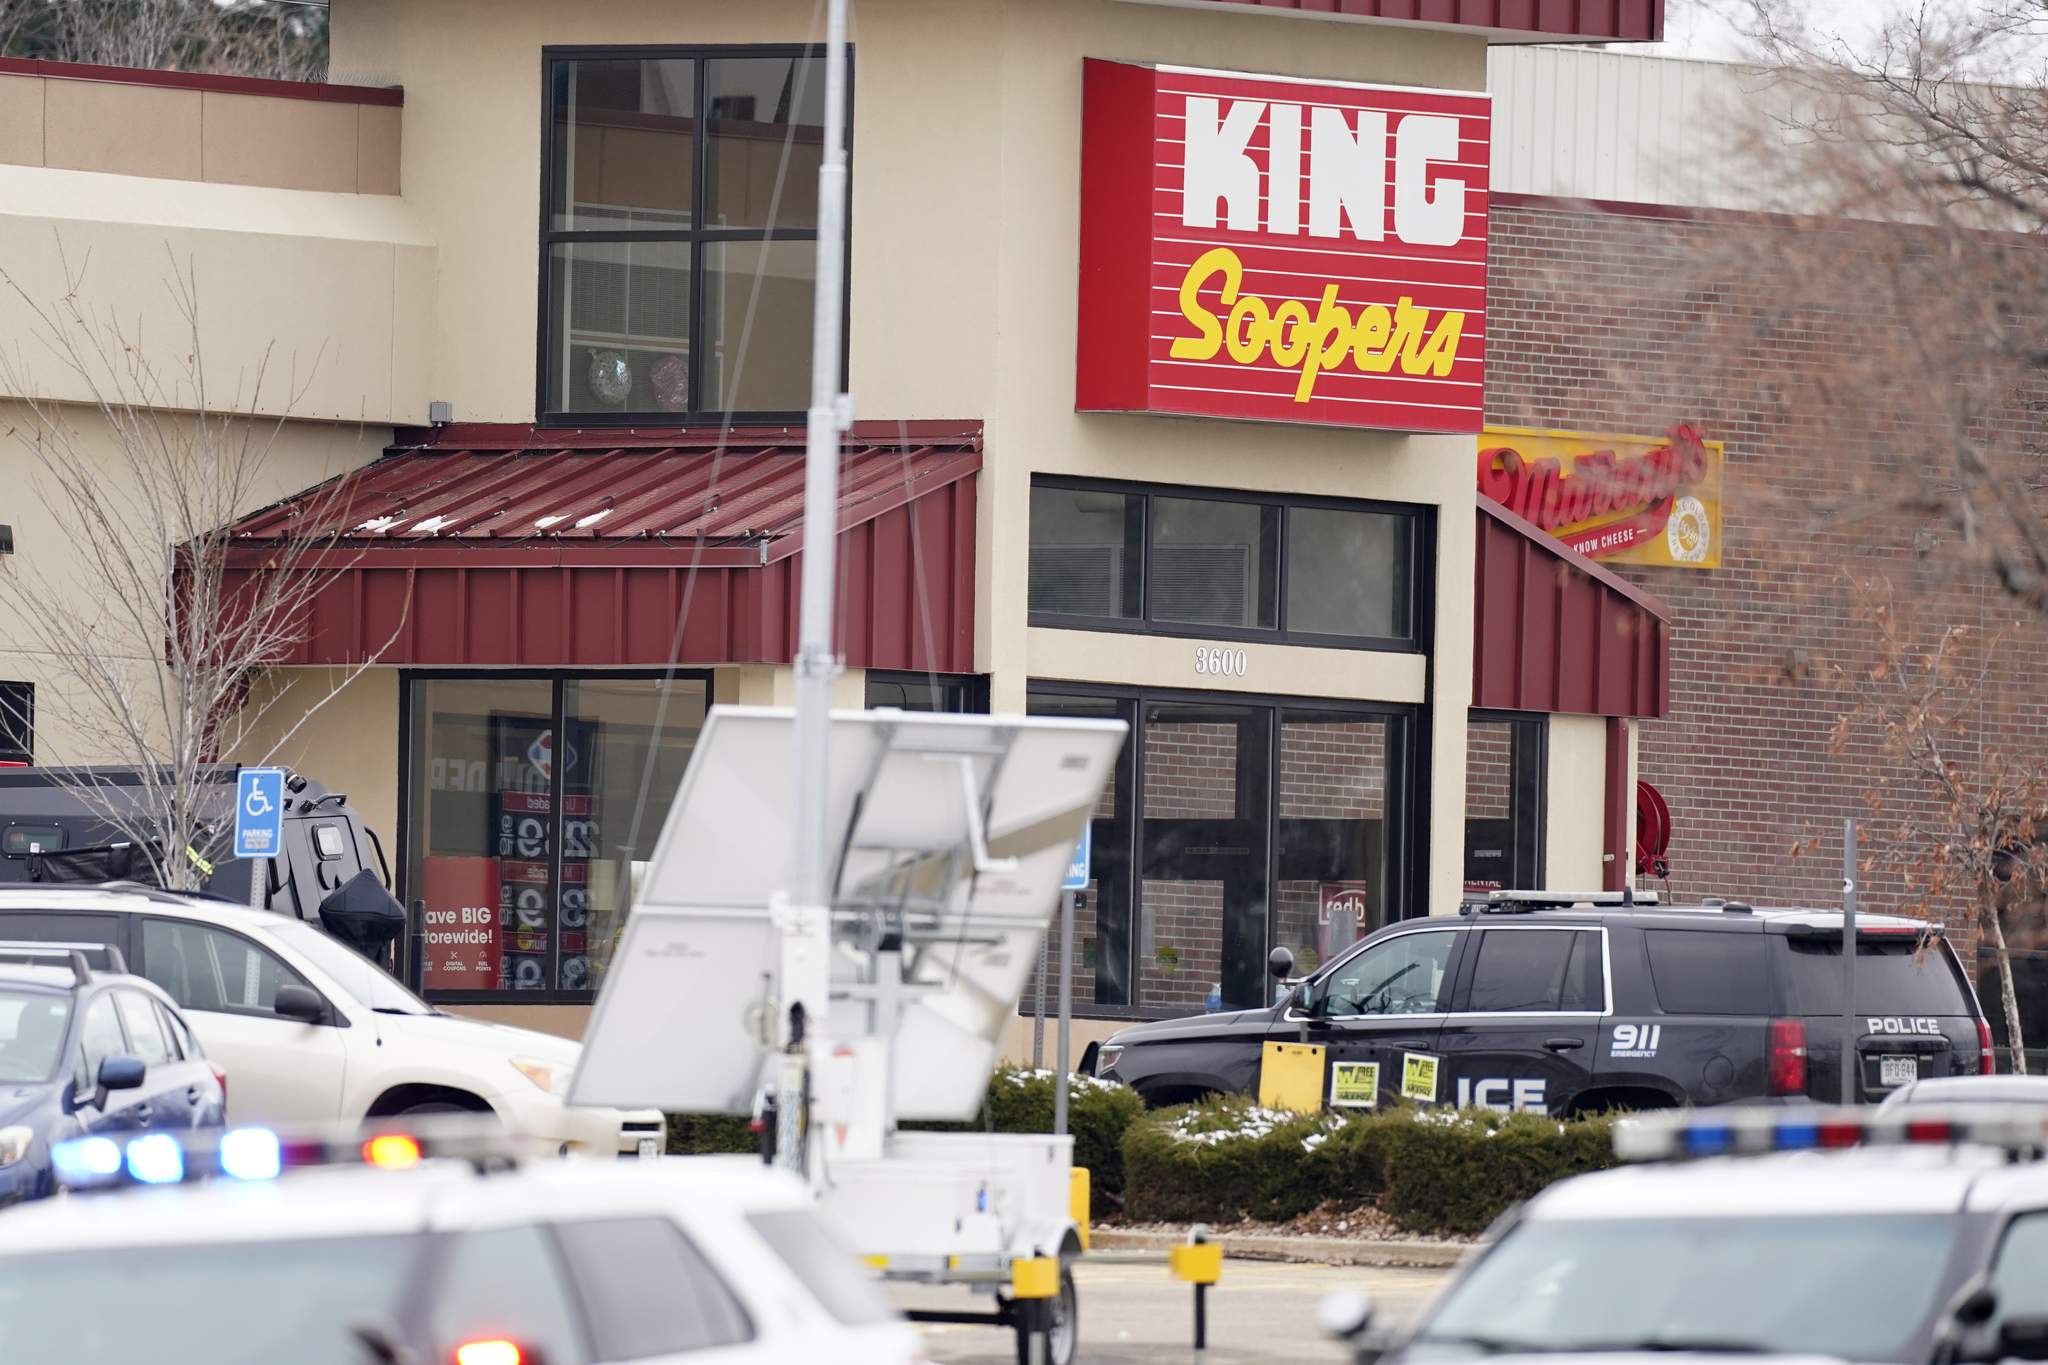 10 people killed at Colorado supermarket, police say